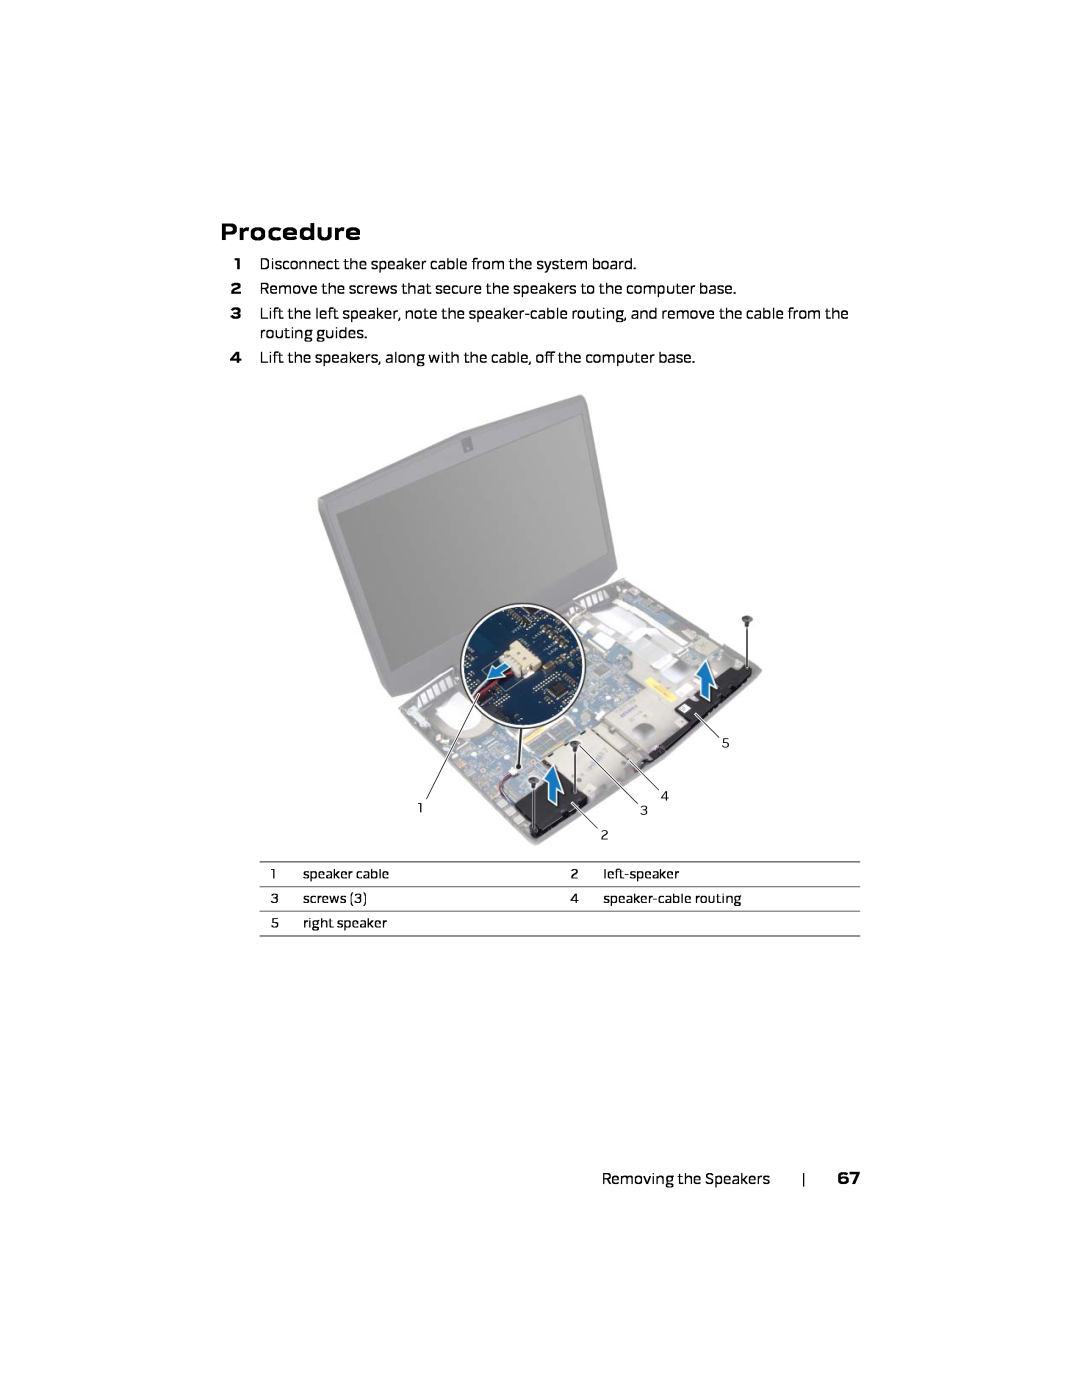 Alienware 17 R1, P18E owner manual Procedure, speaker cable, left-speaker, screws, speaker-cable routing, right speaker 